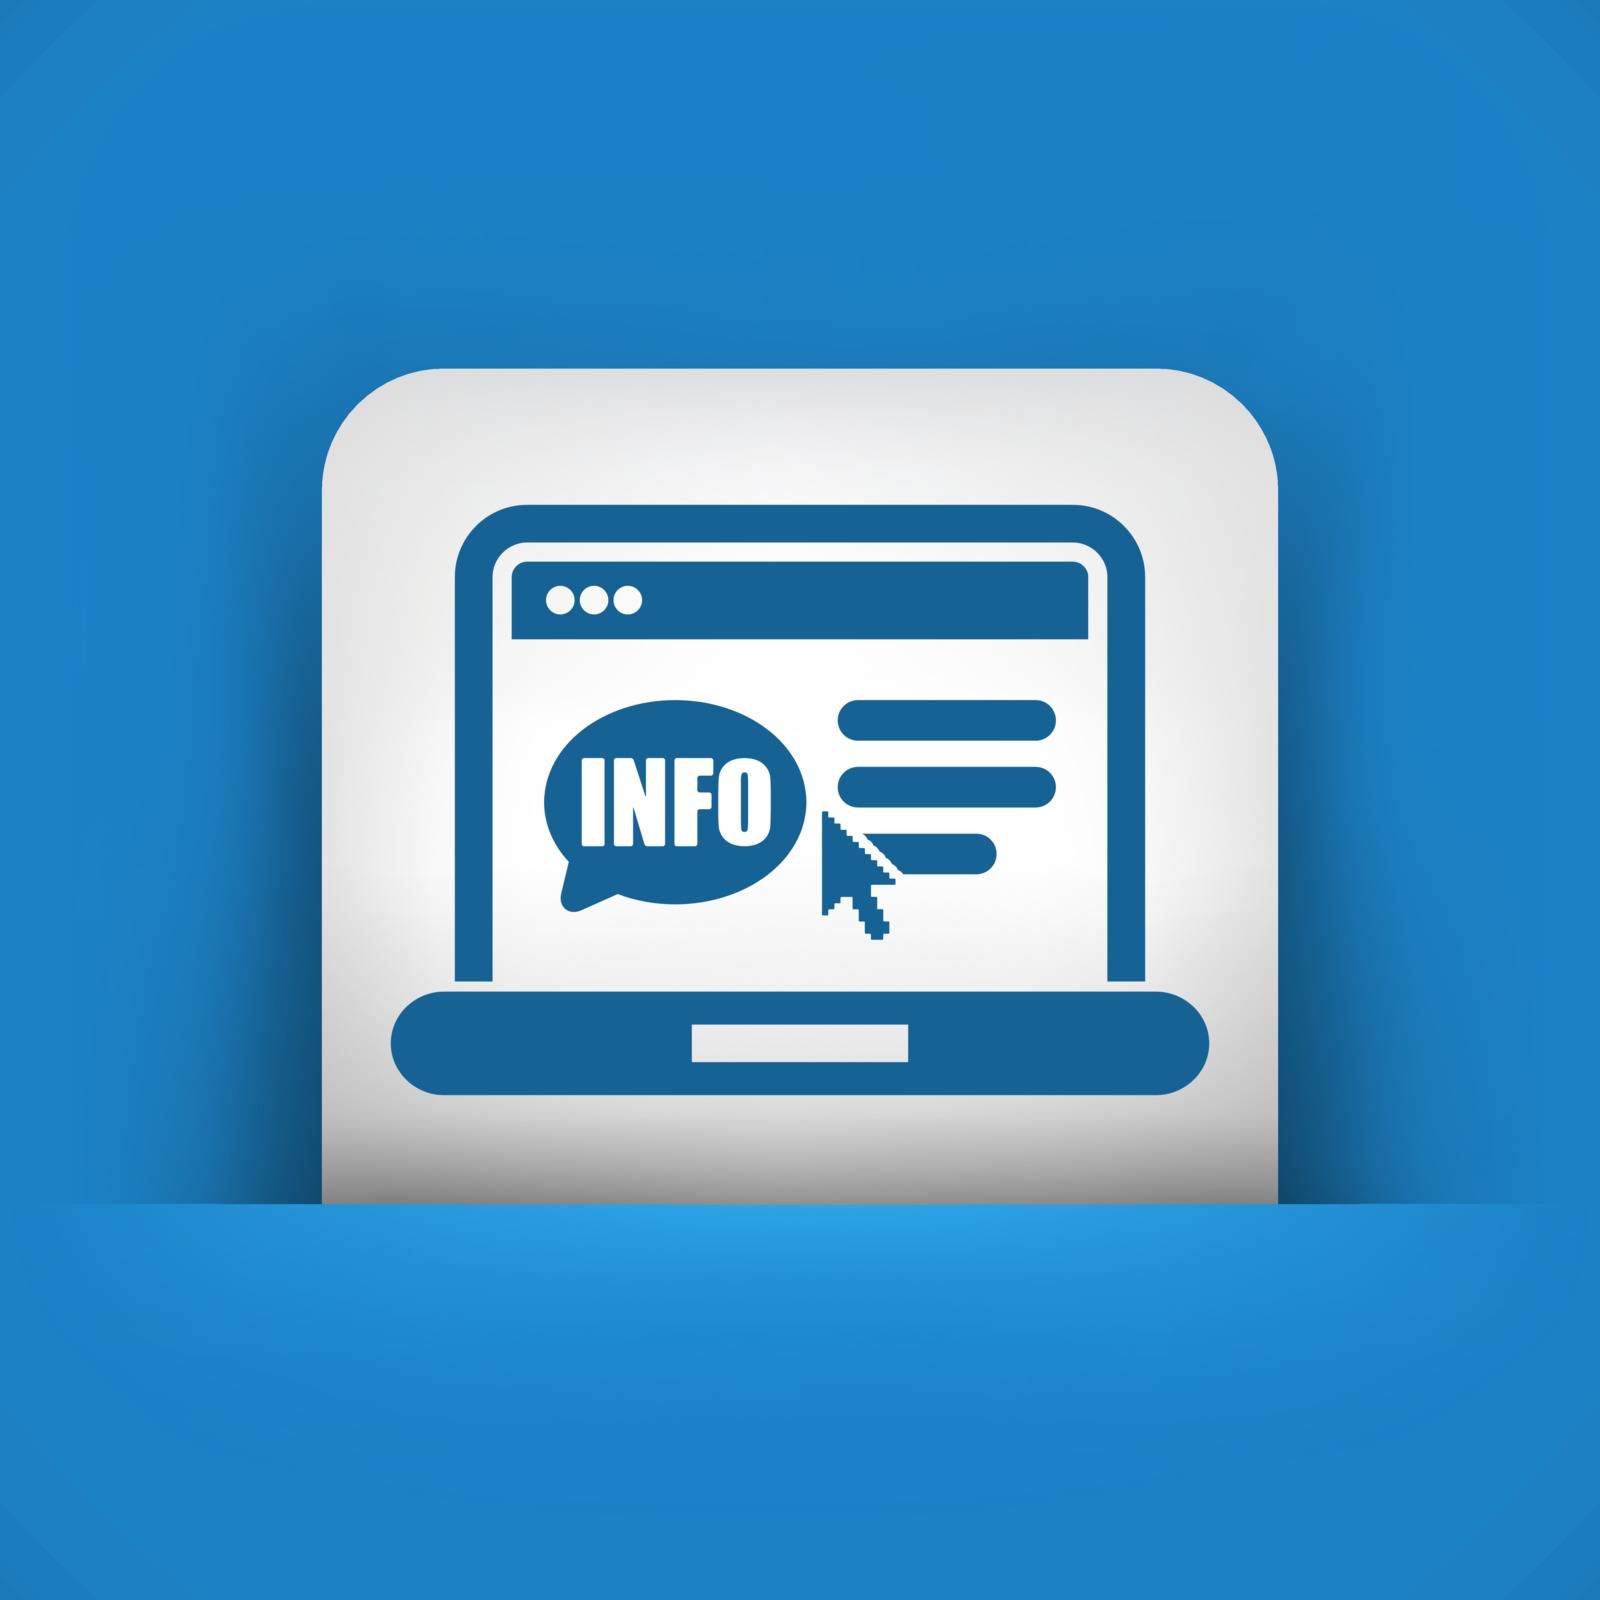 illustration of website "info" icon